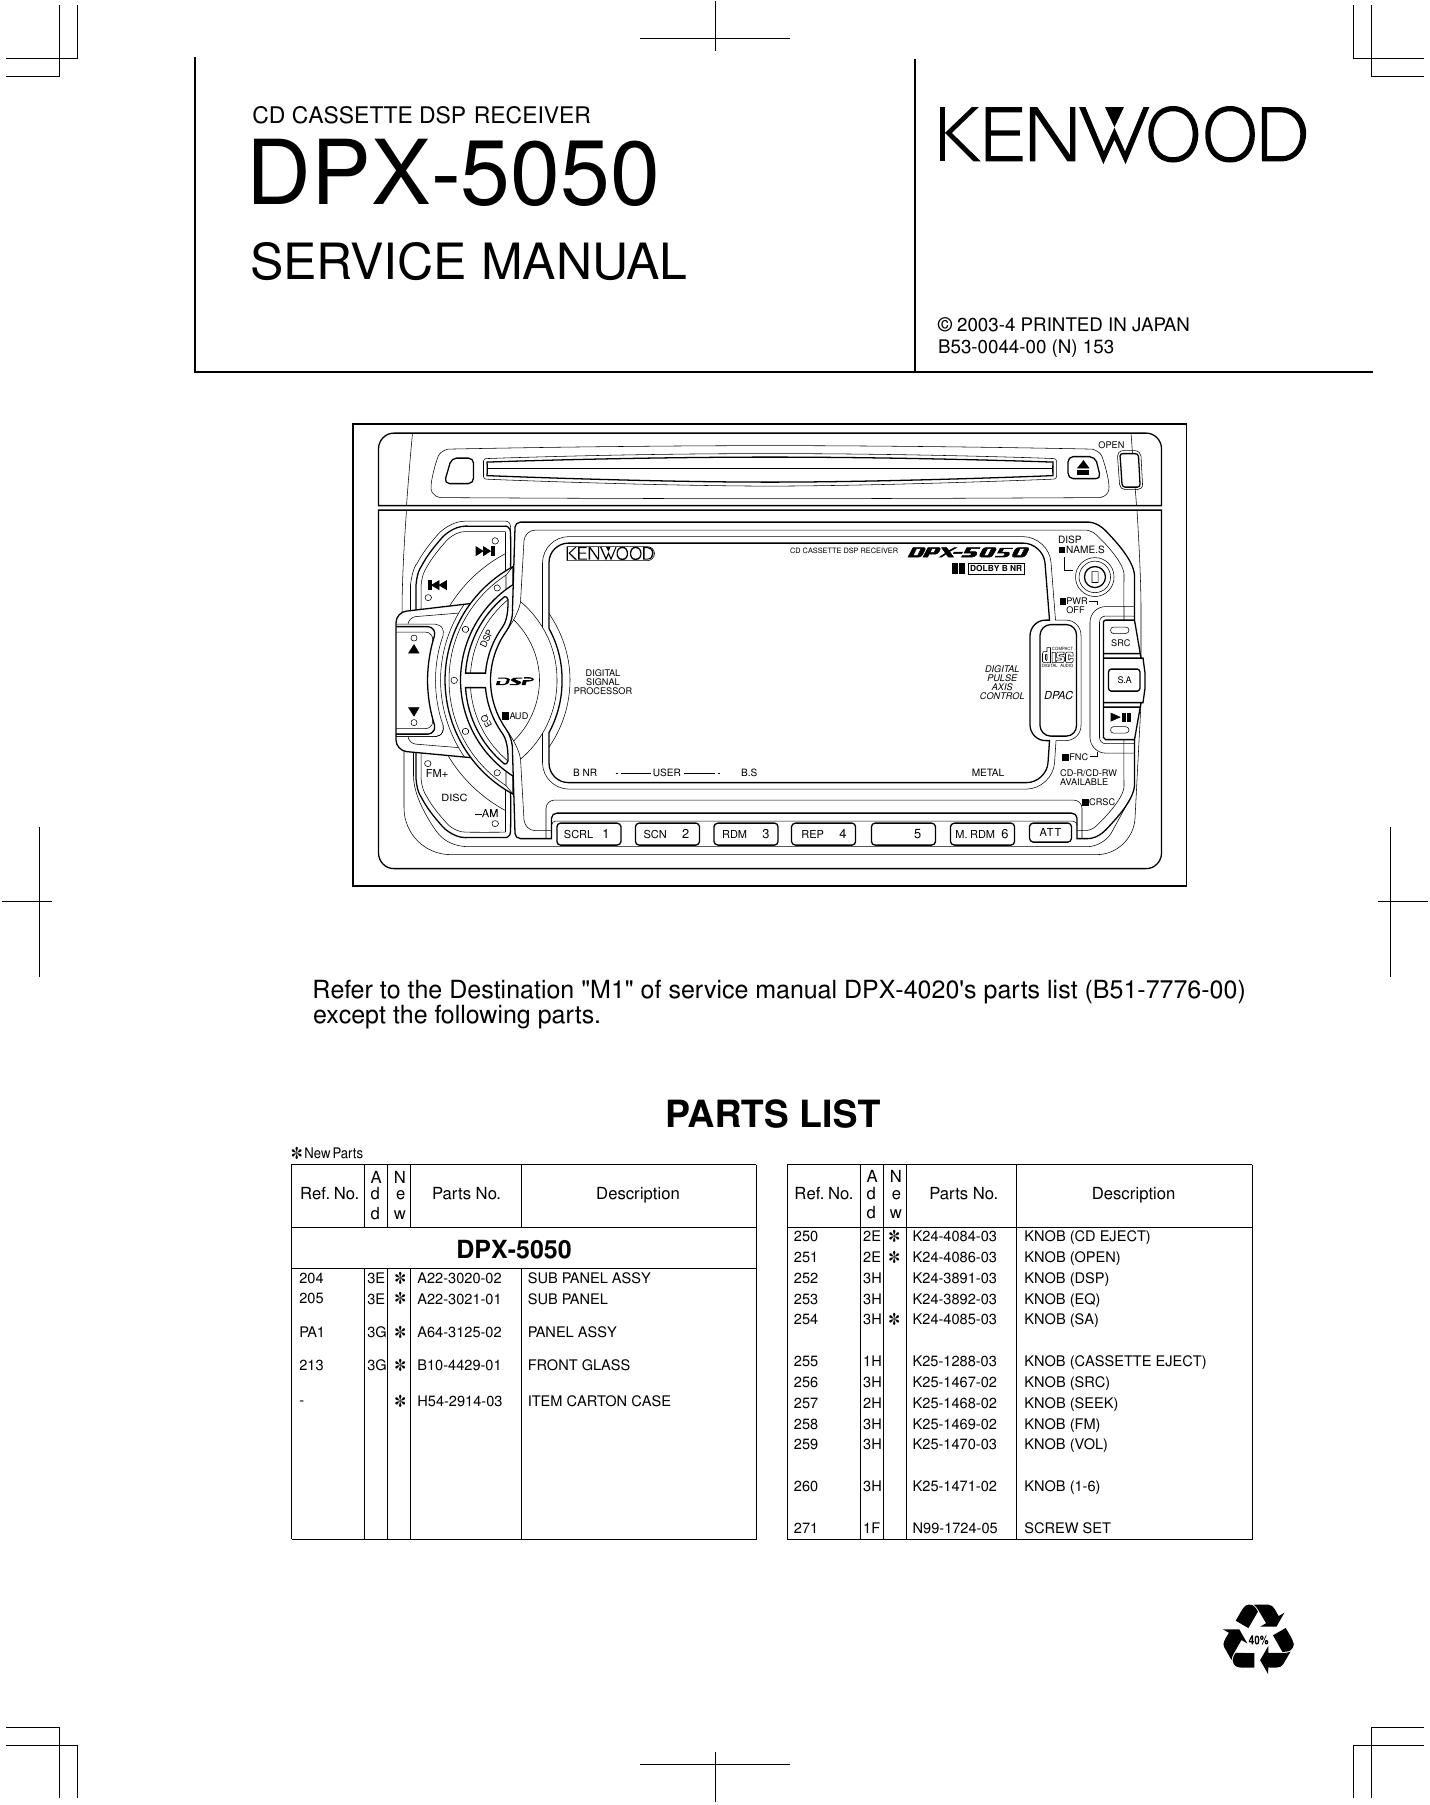 Kenwood DPX 5050 Service Manual